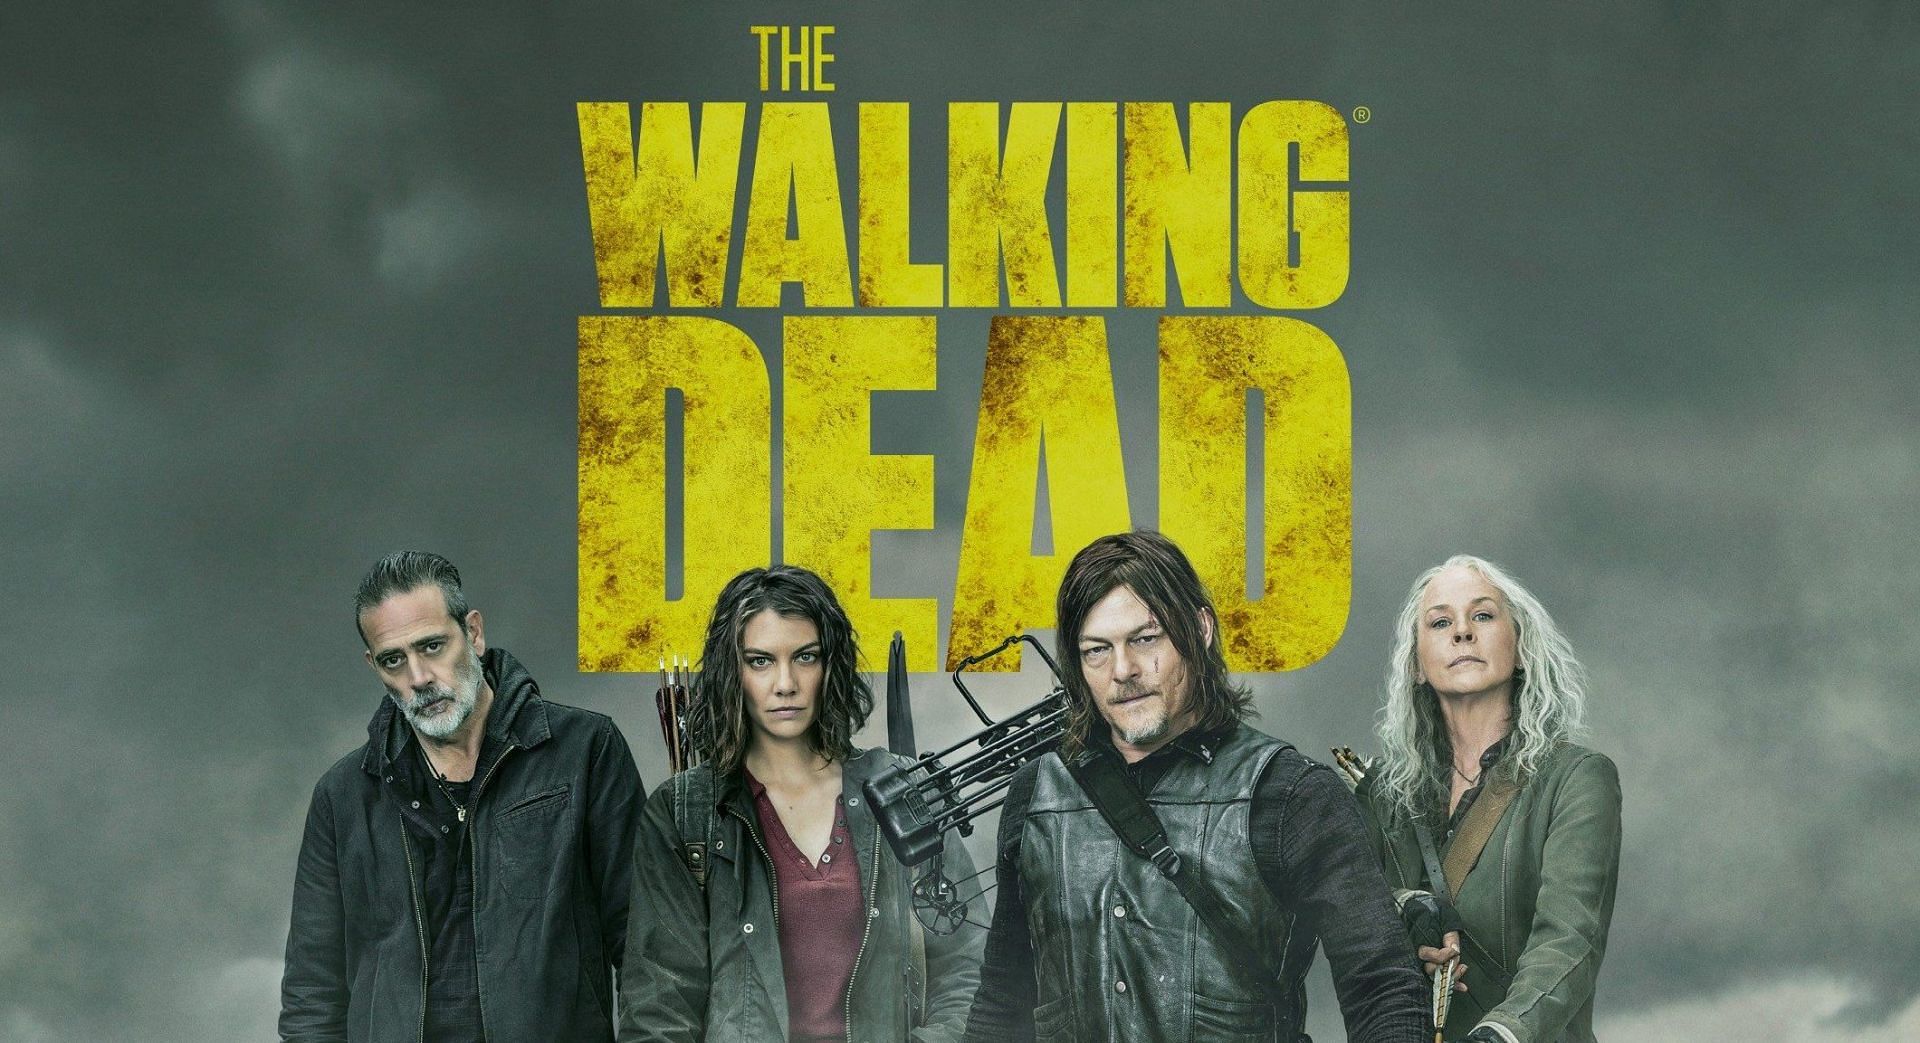 Poster of The Walking Dead season 11. (Photo via Disney)